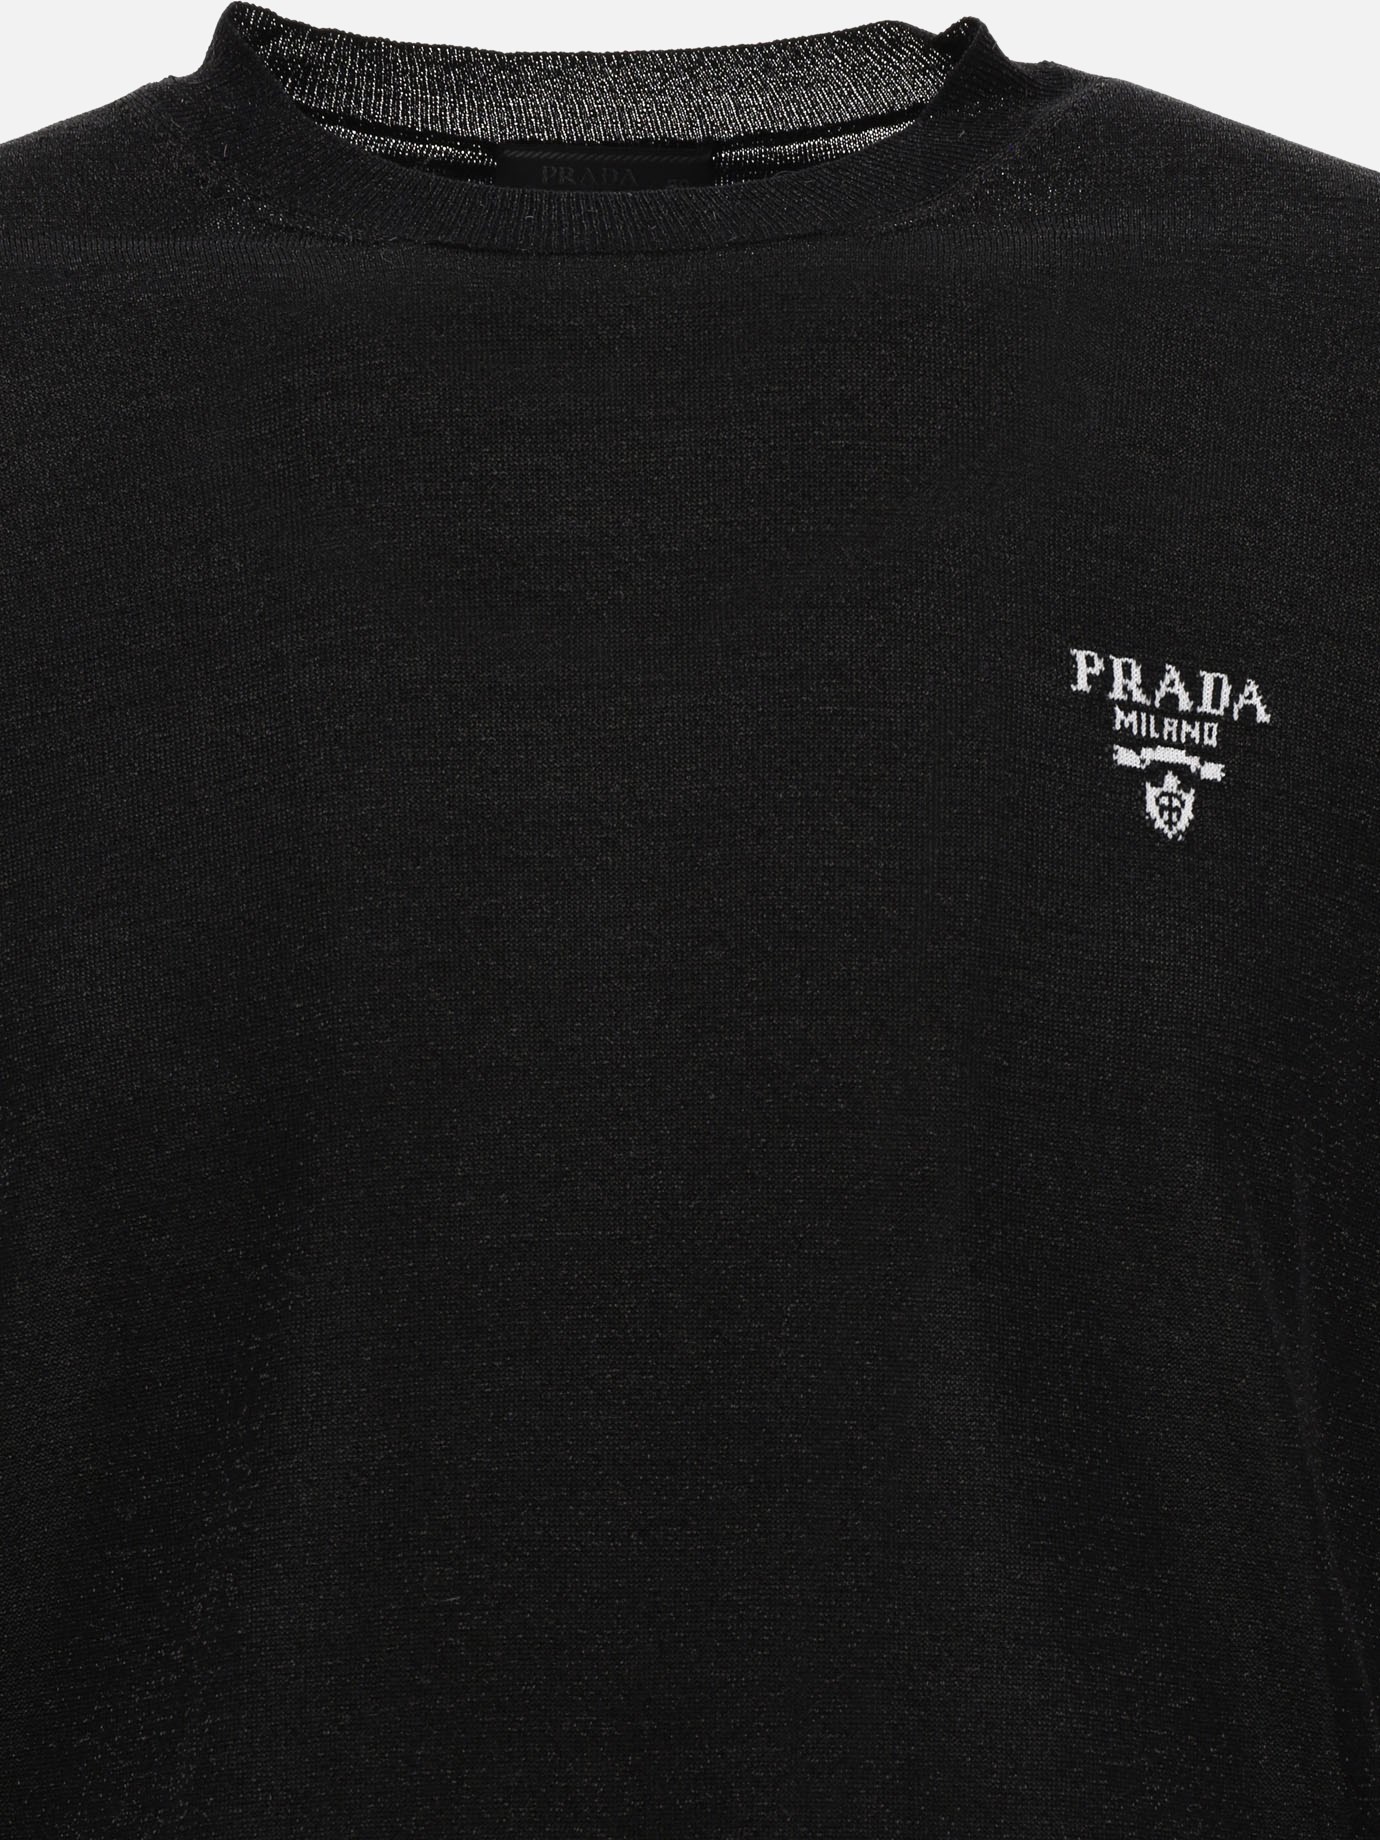 Lamé sweater by Prada